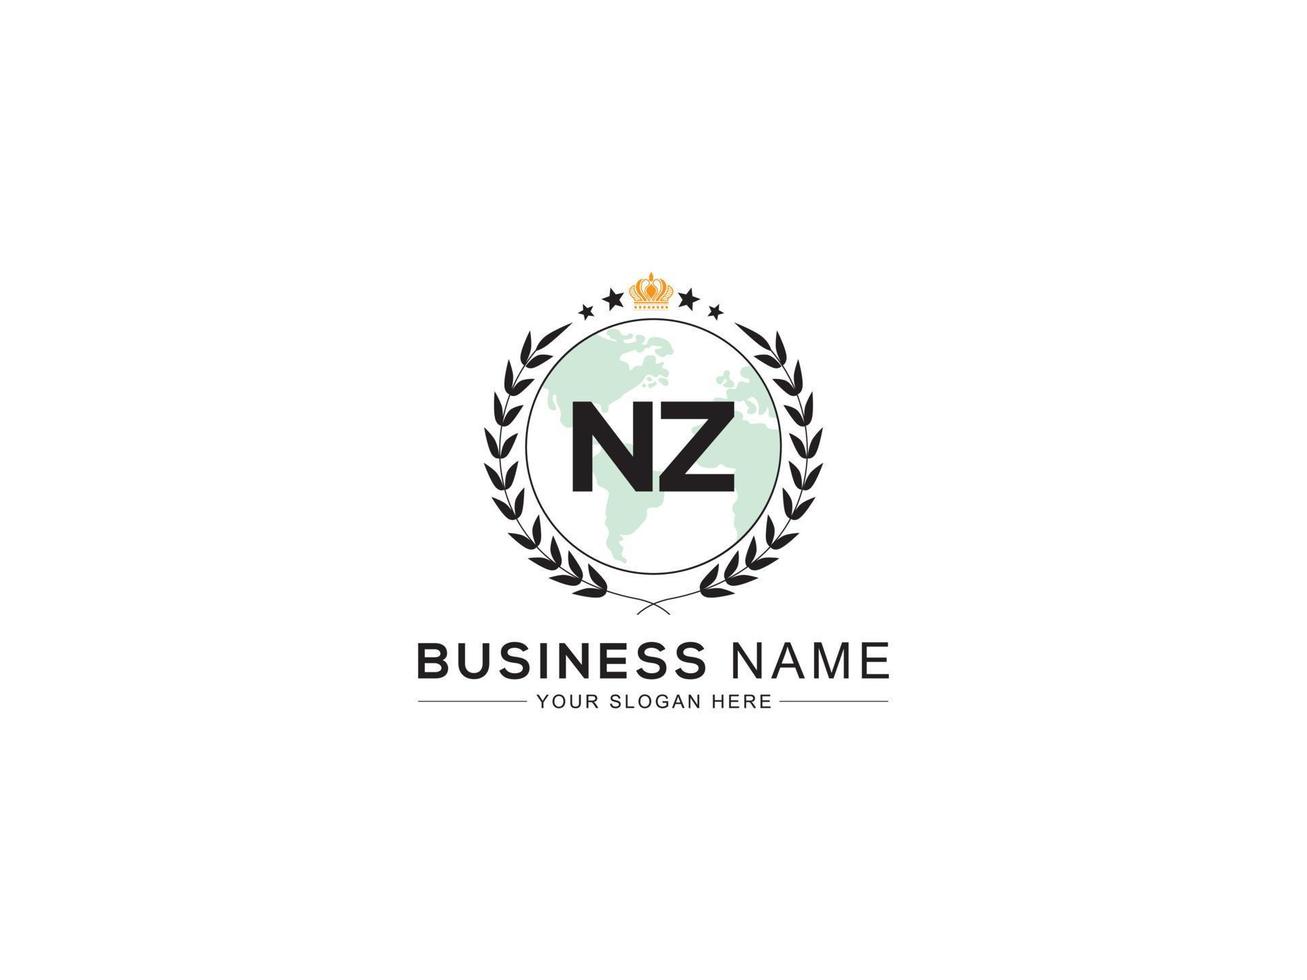 Minimalist Nz Logo Icon, Luxury Crown and Three Star NZ Business Logo Letter Design vector